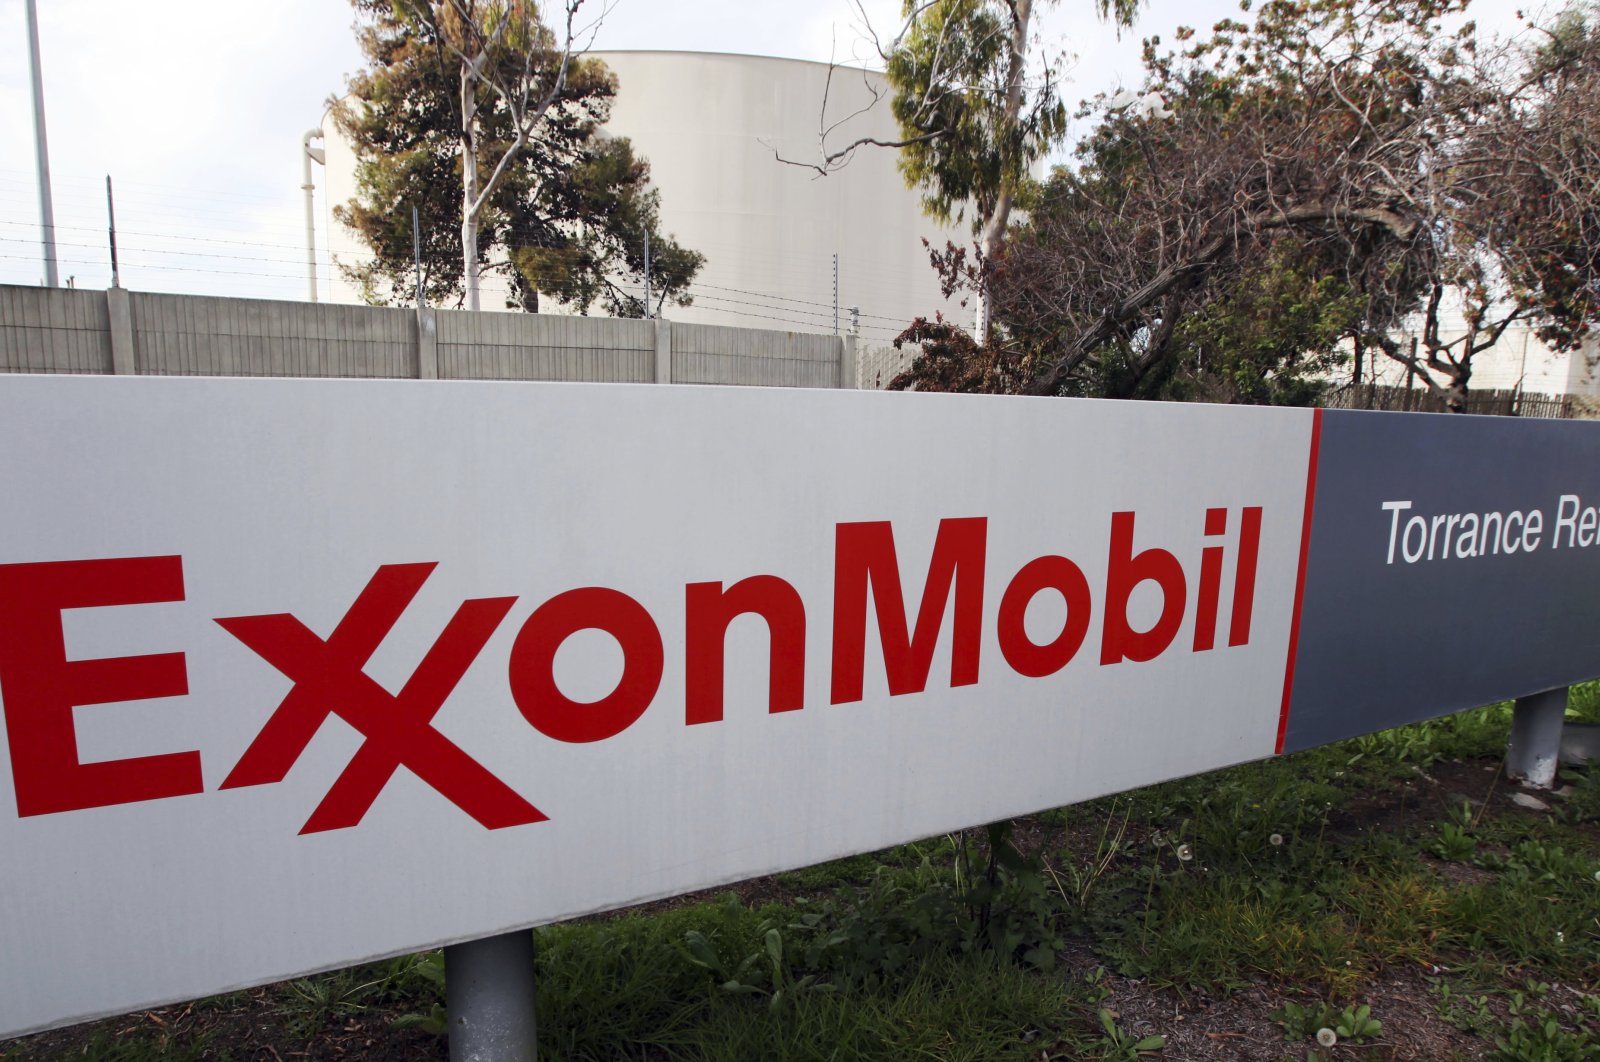 The sign for the ExxonMobil Torrance Refinery in Torrance, California, U.S., Jan. 30, 2012. (AP Photo)